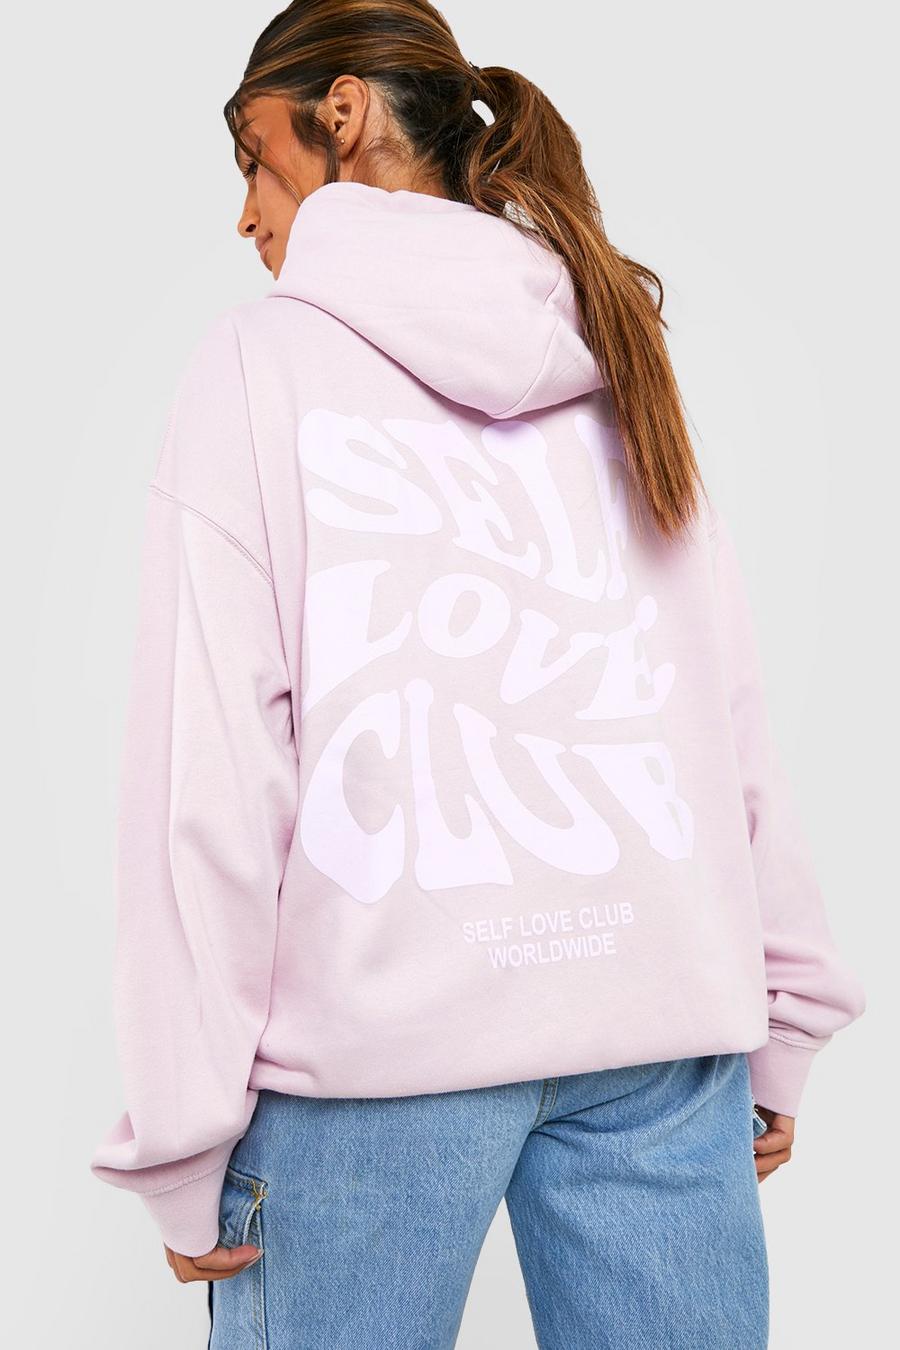 Self Love Club Slogan Oversized Hoodie | boohoo